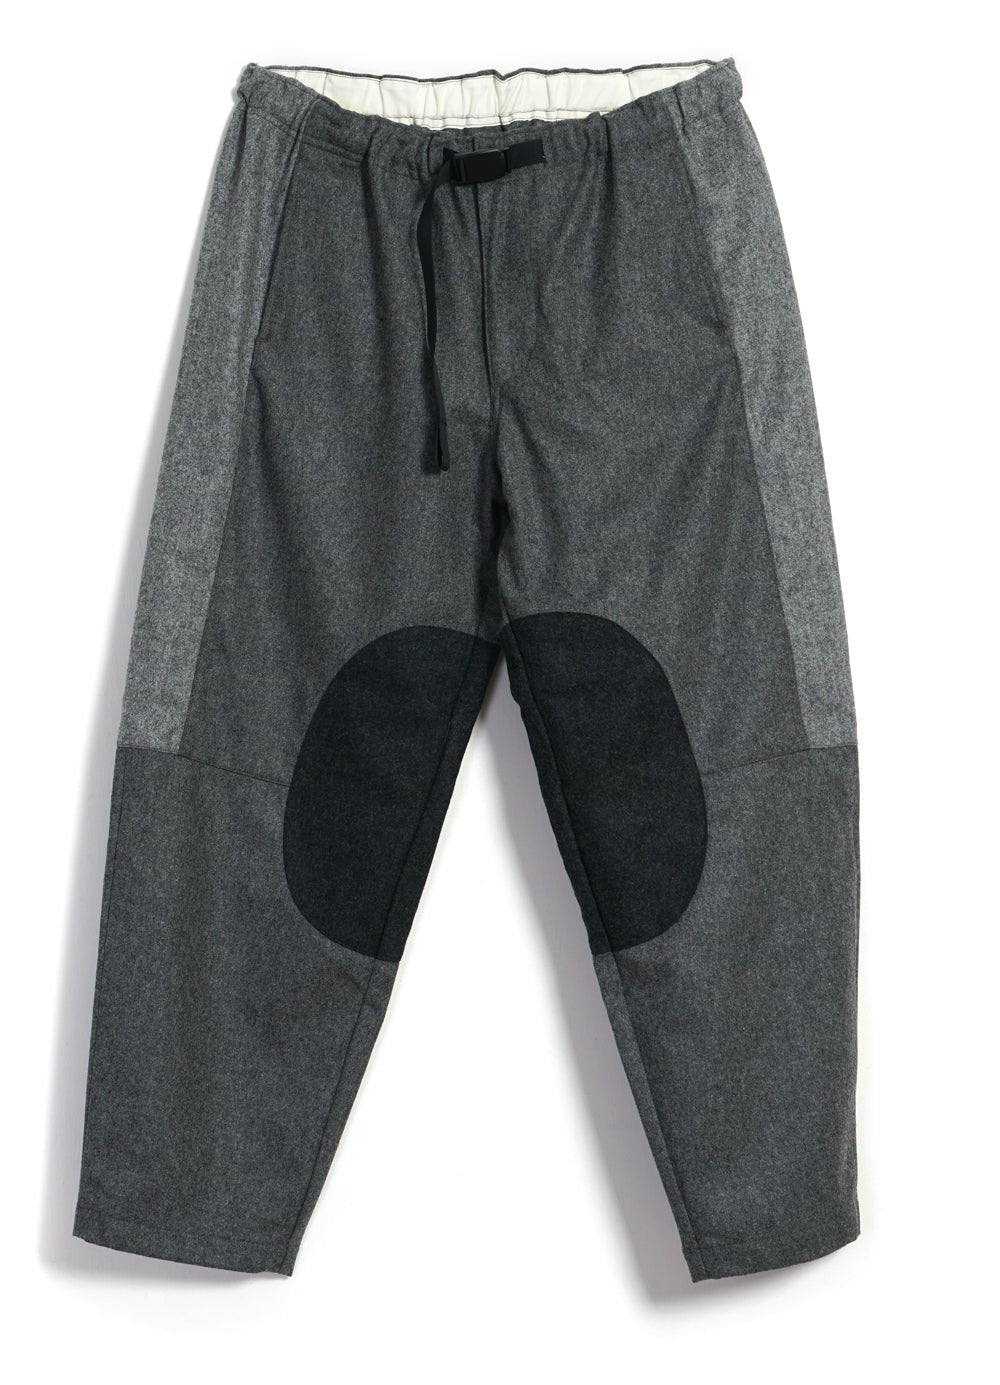 MOUNTAIN RESEARCH - TRACK PANTS | Grey - HANSEN Garments